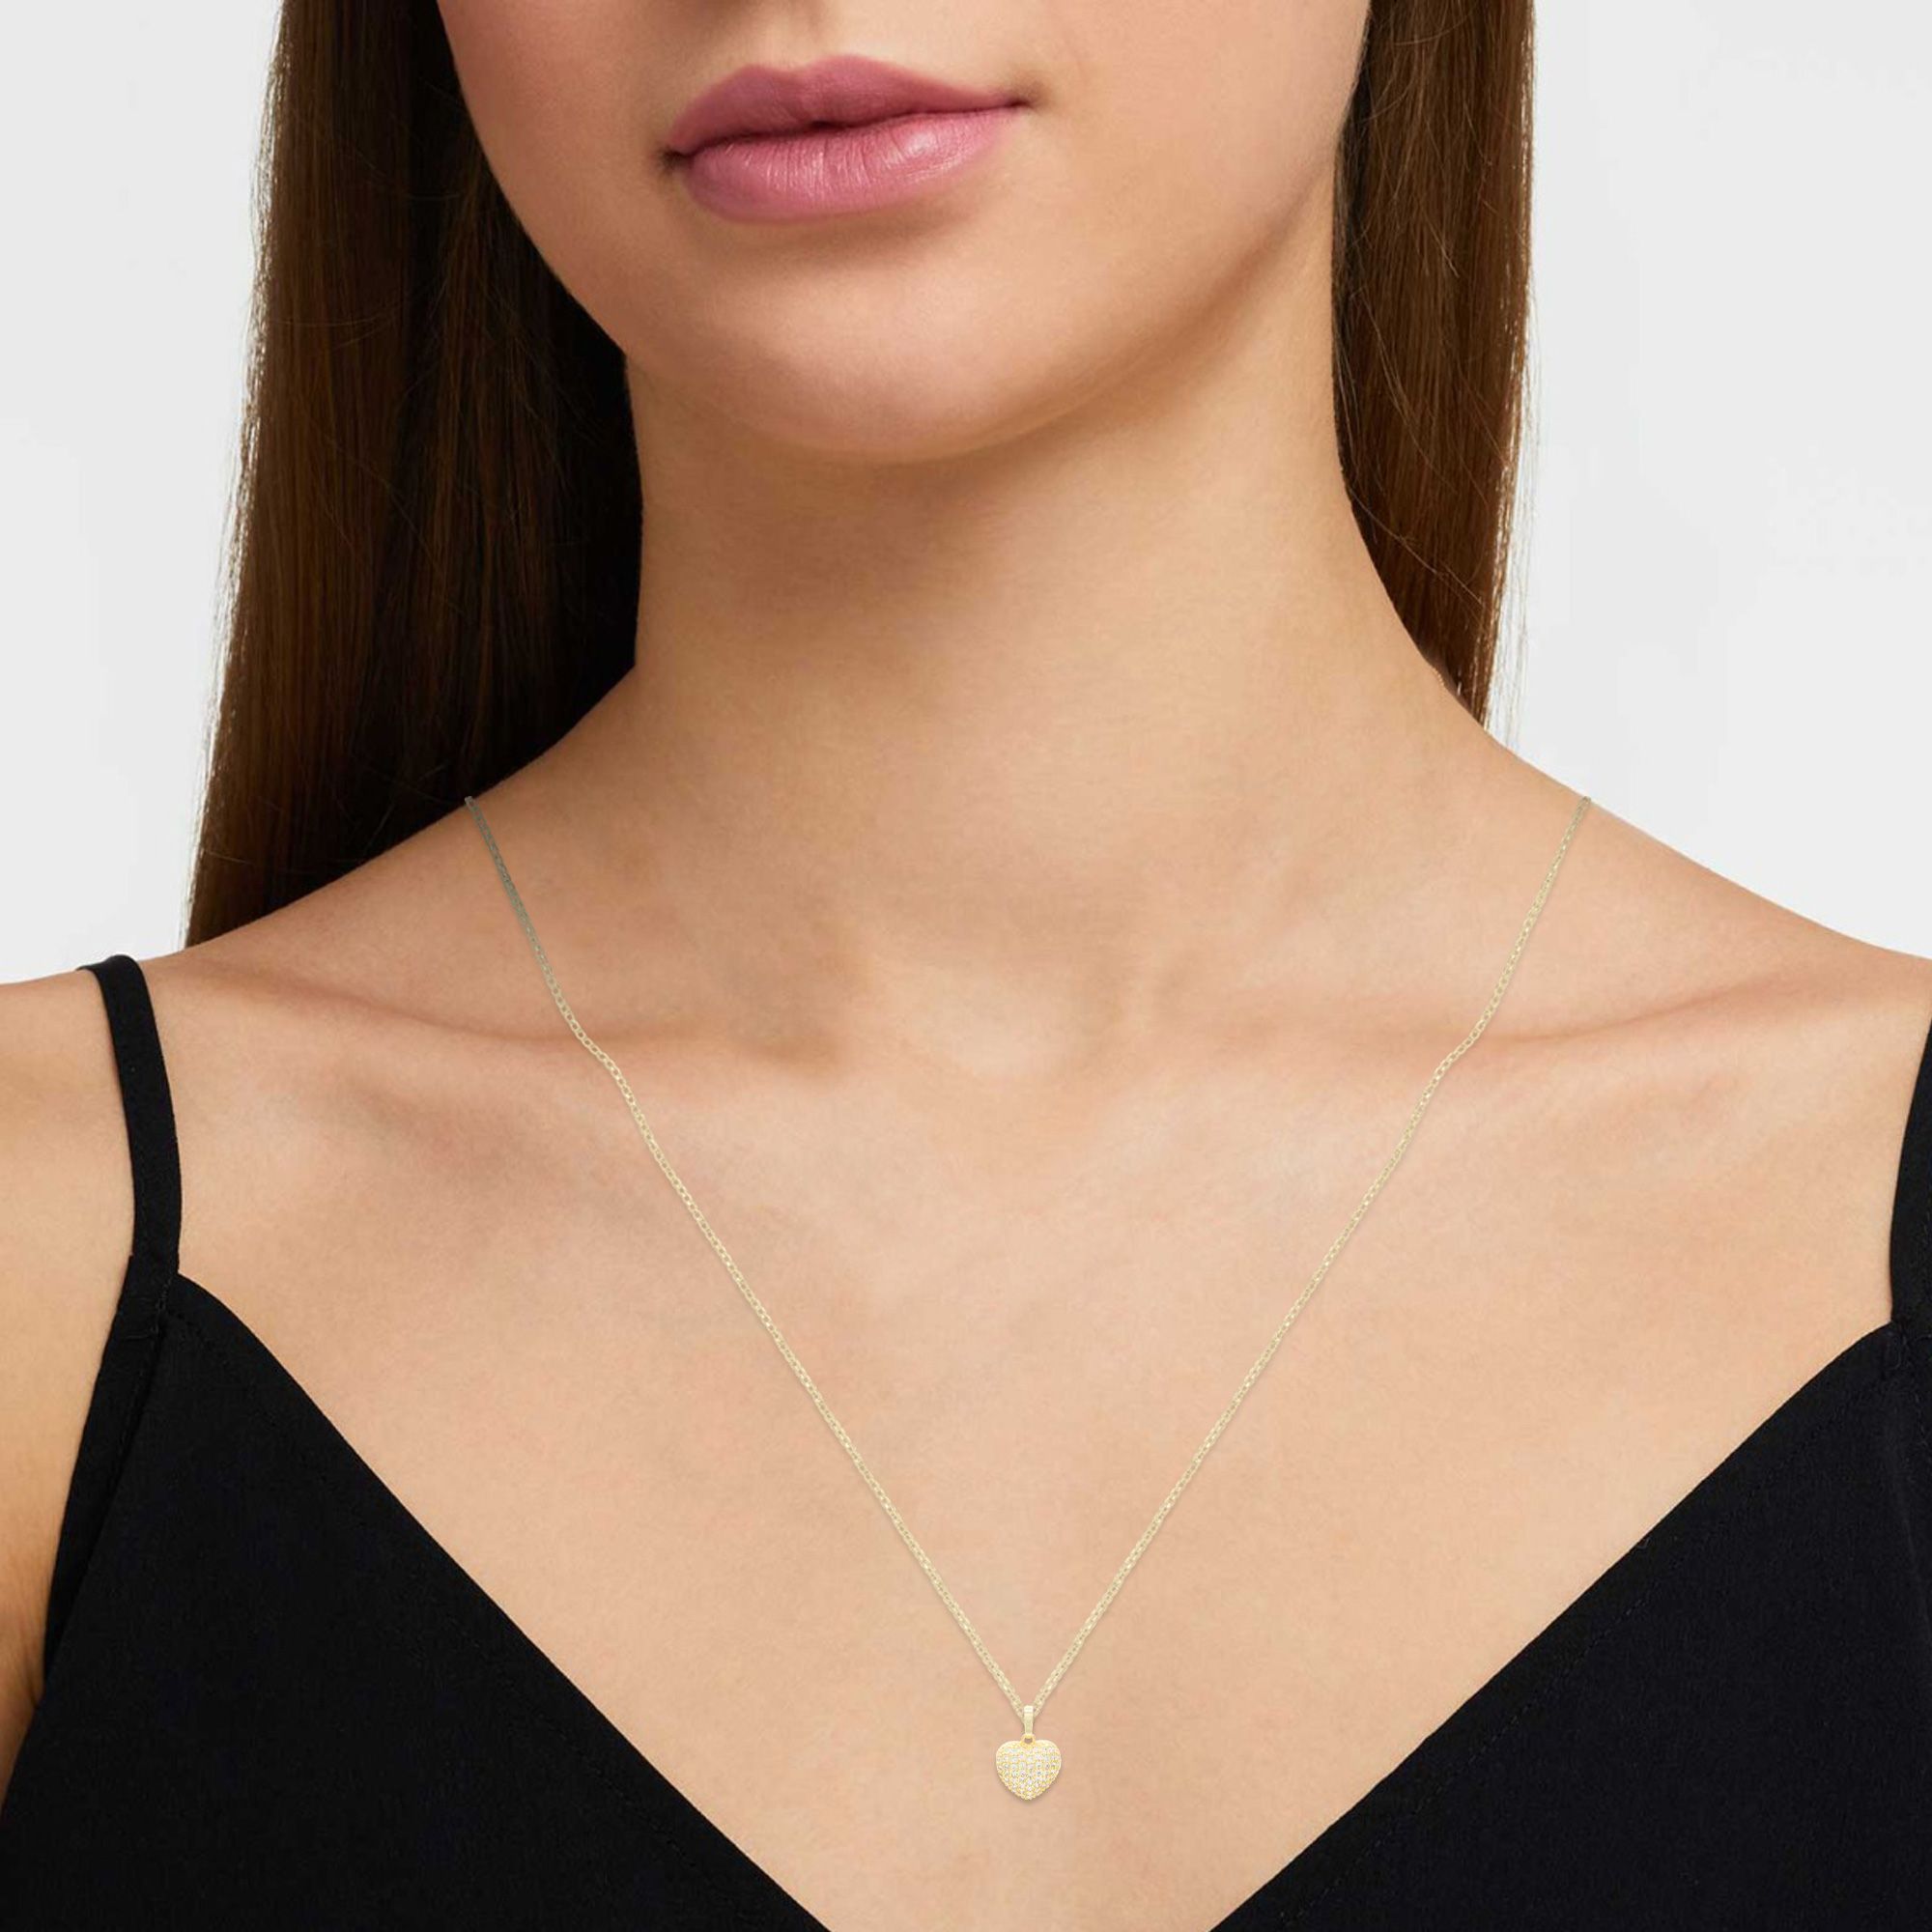 Cubic Zirconia 14K Gold Filled Voluminous Heart Pendant Necklace Set